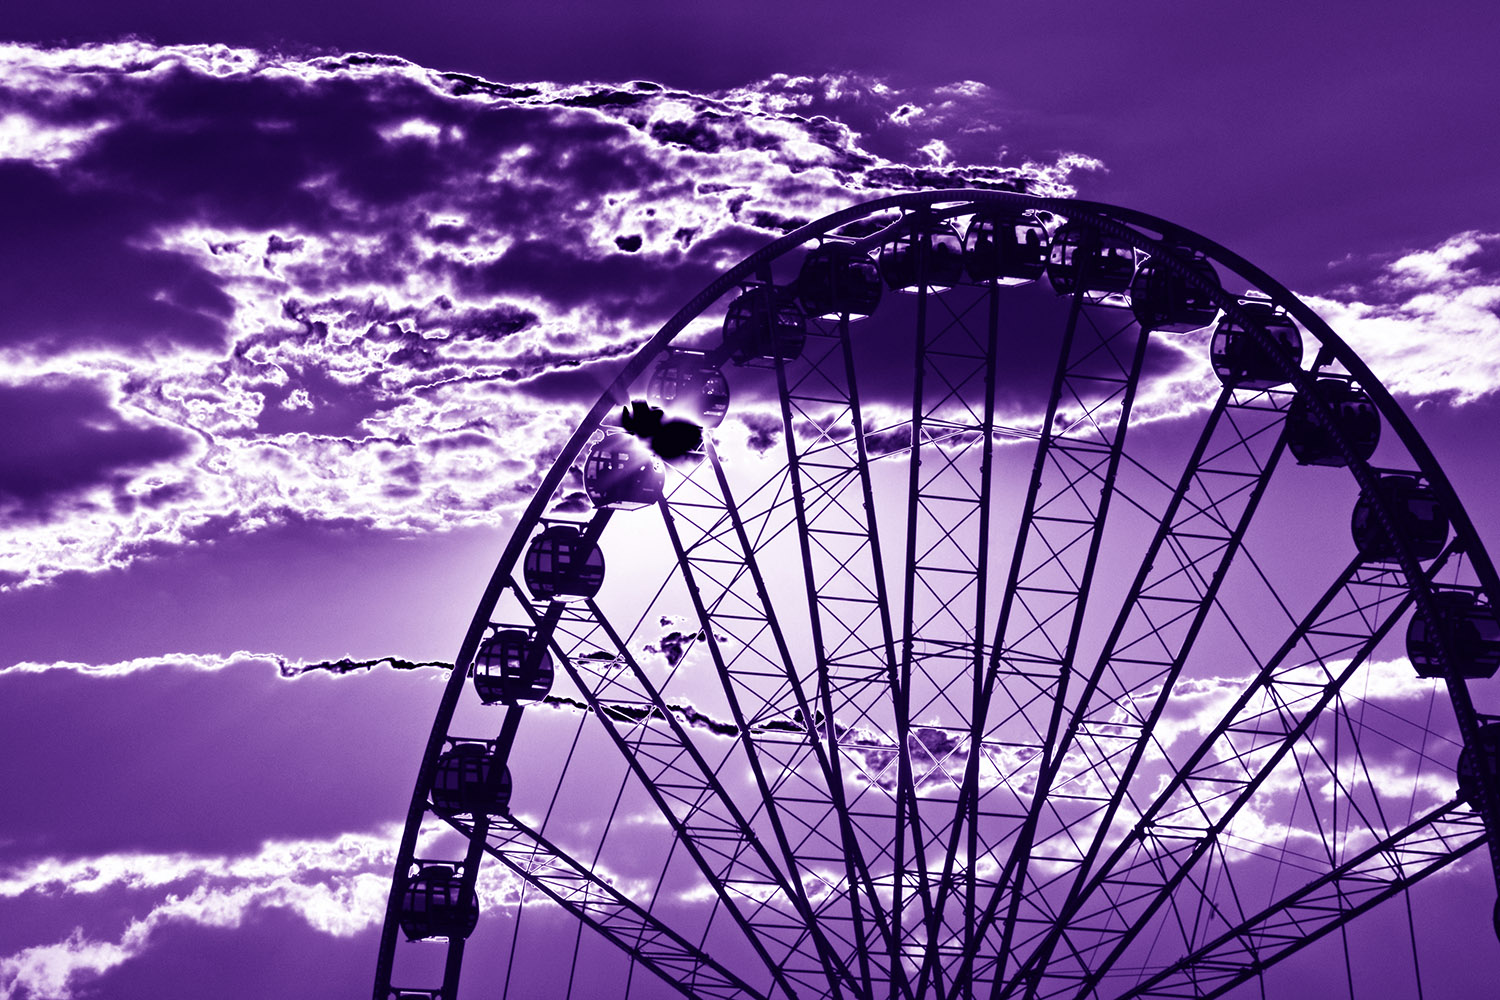 Ferris_Wheel,_National_Harbor_Sun_Clouds_Purple_Violet_Silhouette_Maryland.jpg